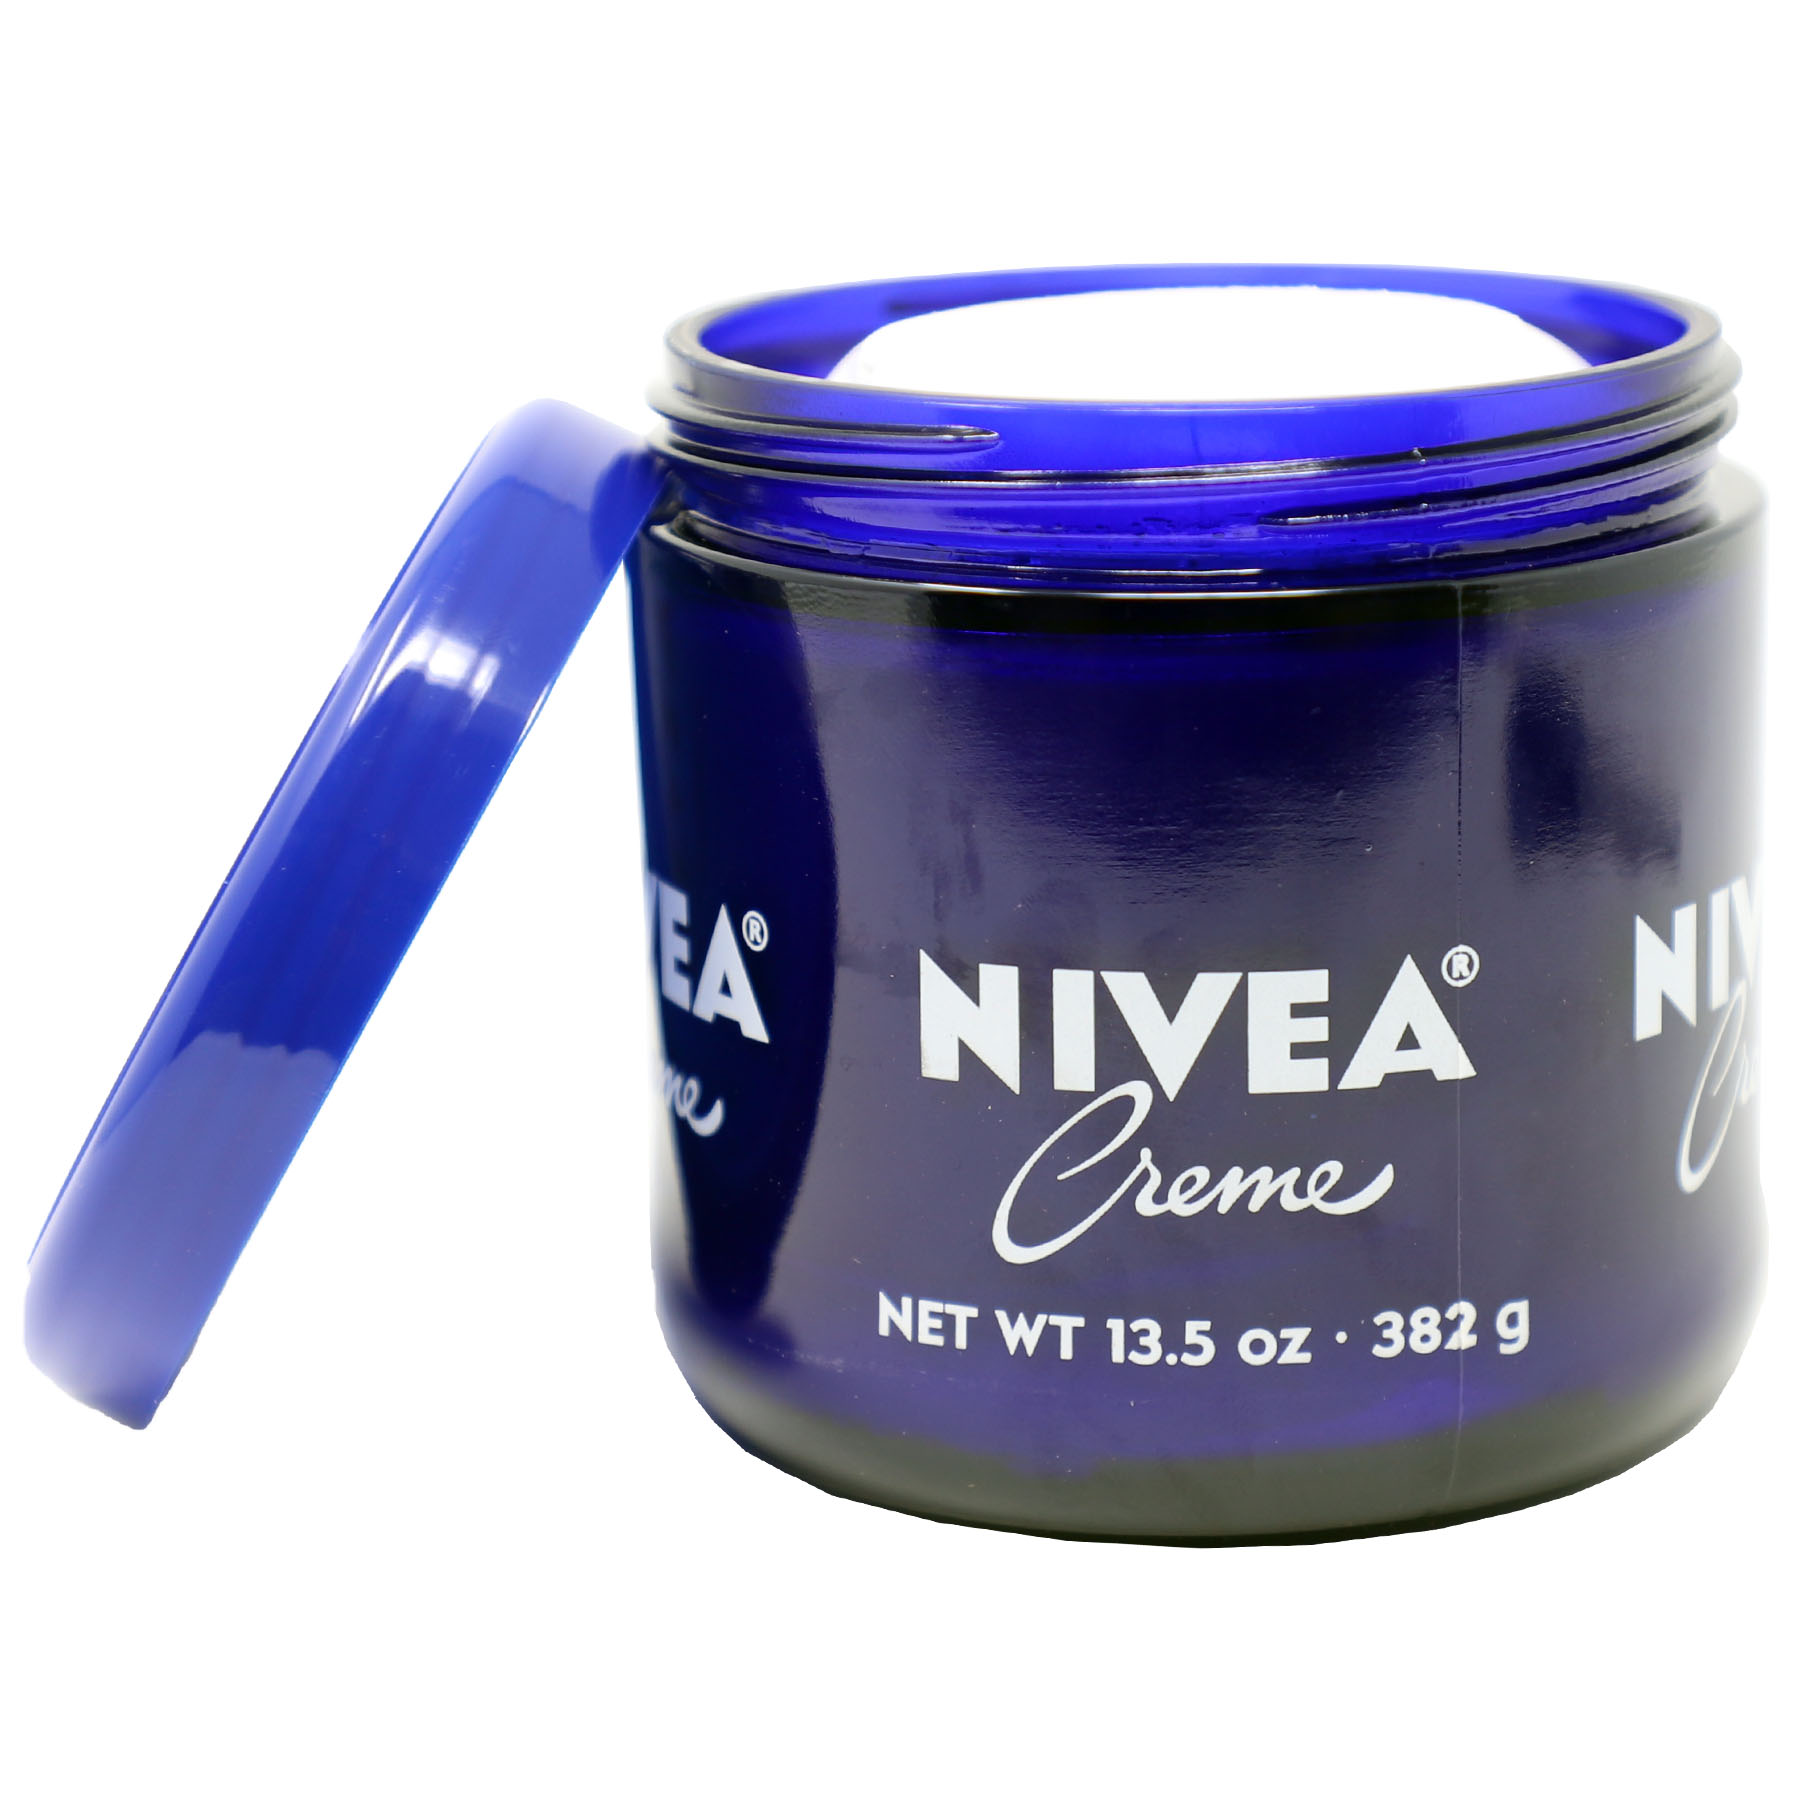 Nivea Cream Glass Jar, Moisturizer for Body, Face & Hand Care, All Skin Types, 13.5 oz - image 1 of 5